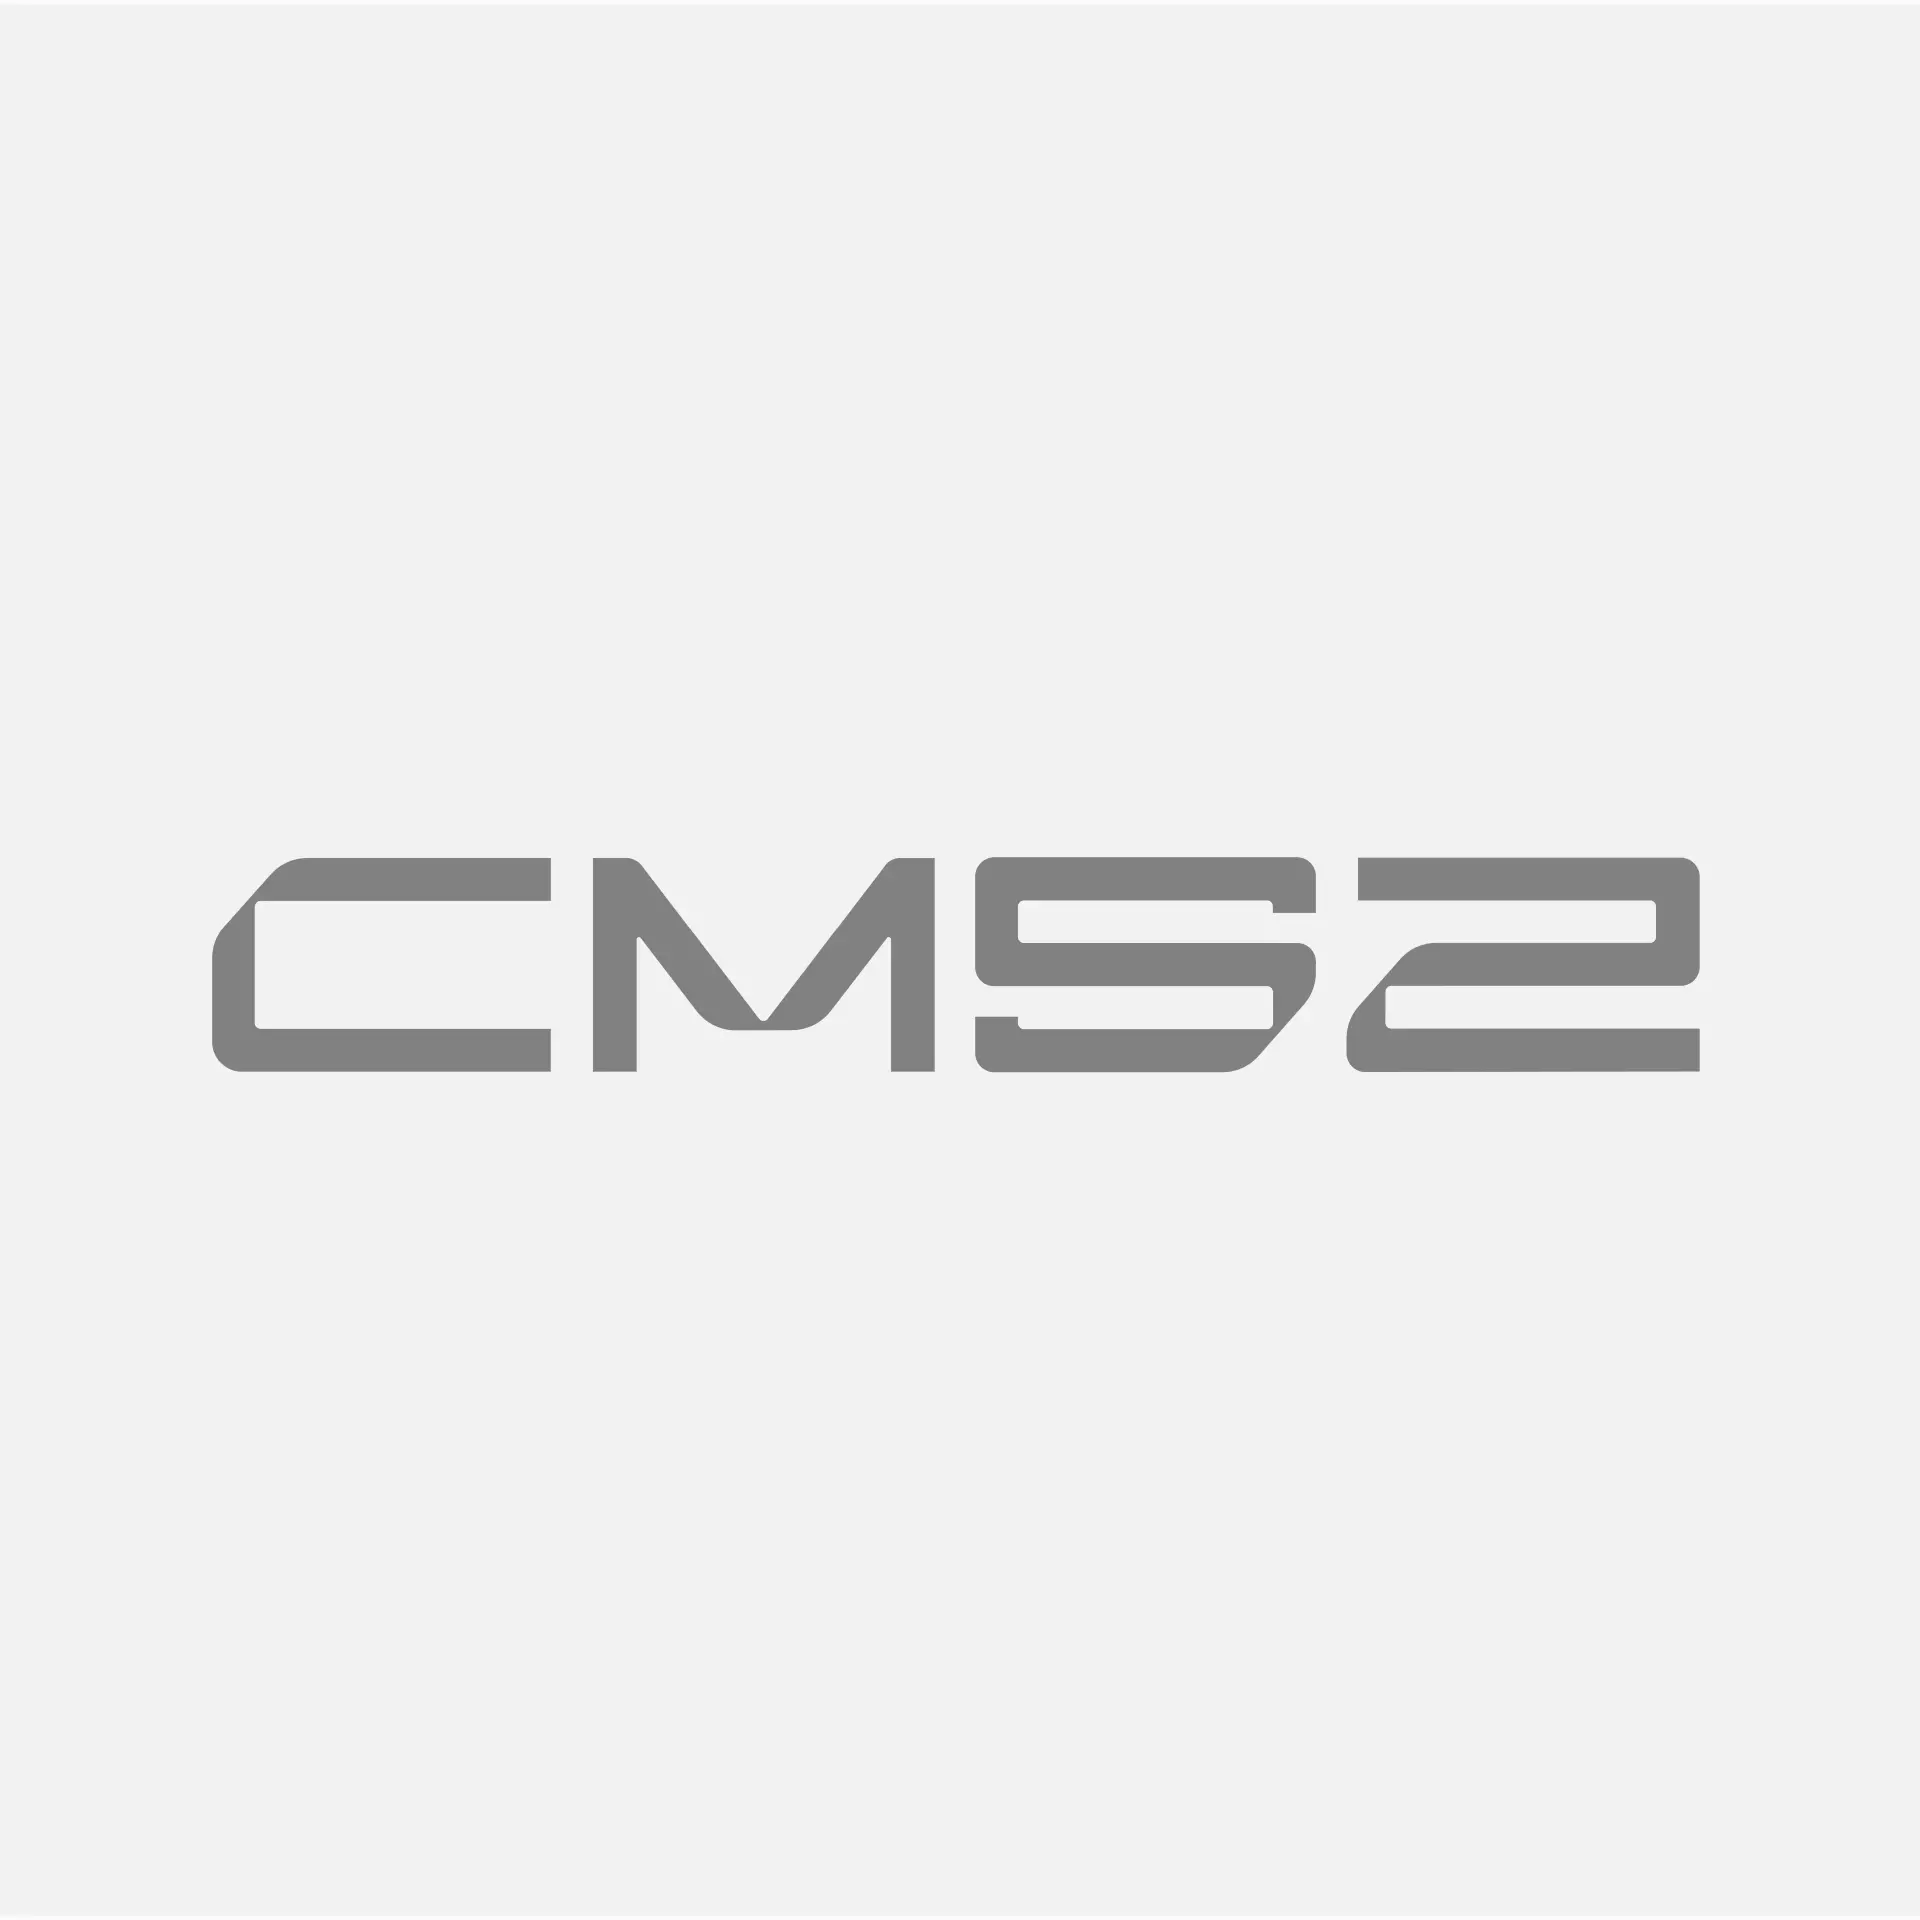 CMS2